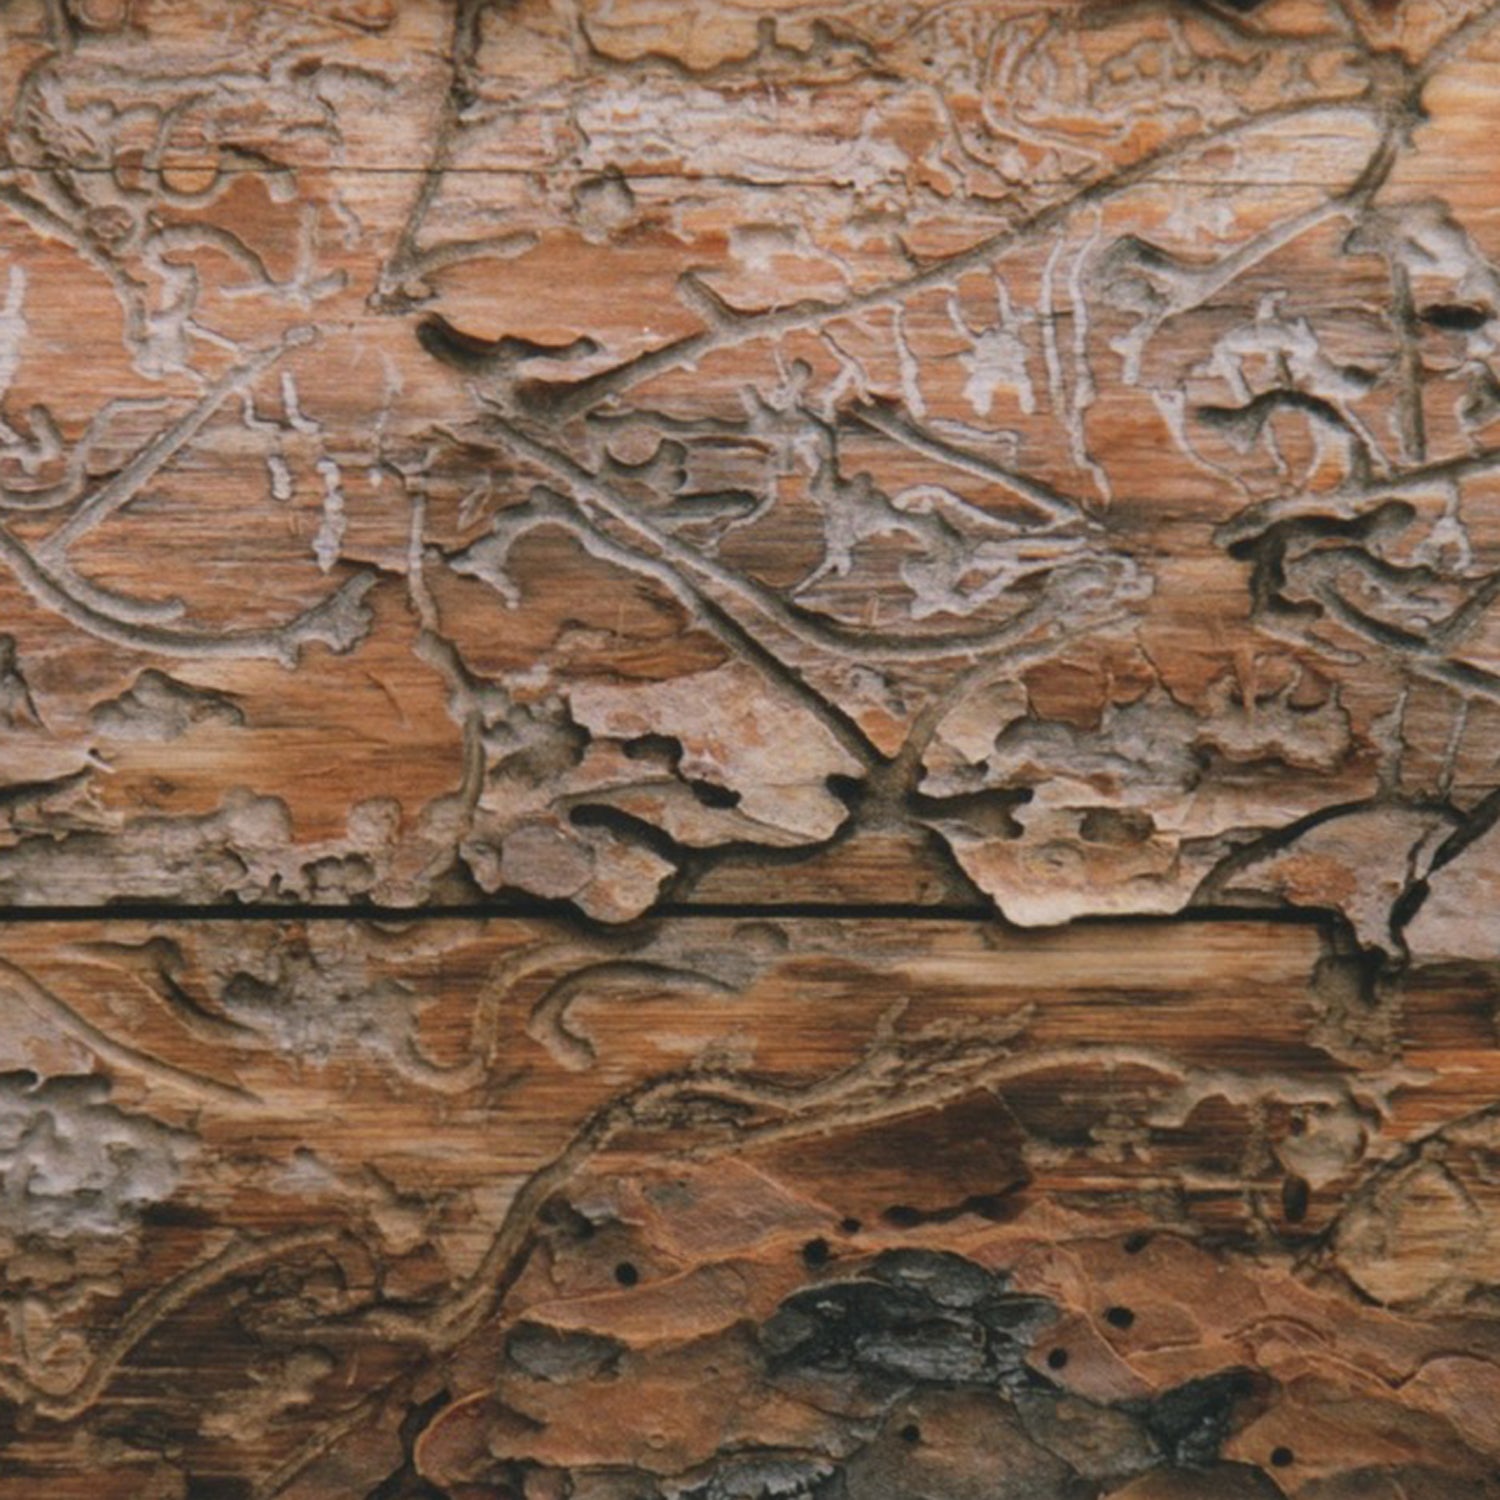 Fallen tree bark; a natural inspiration behind Estelle Vernon's unique jewelry designs.